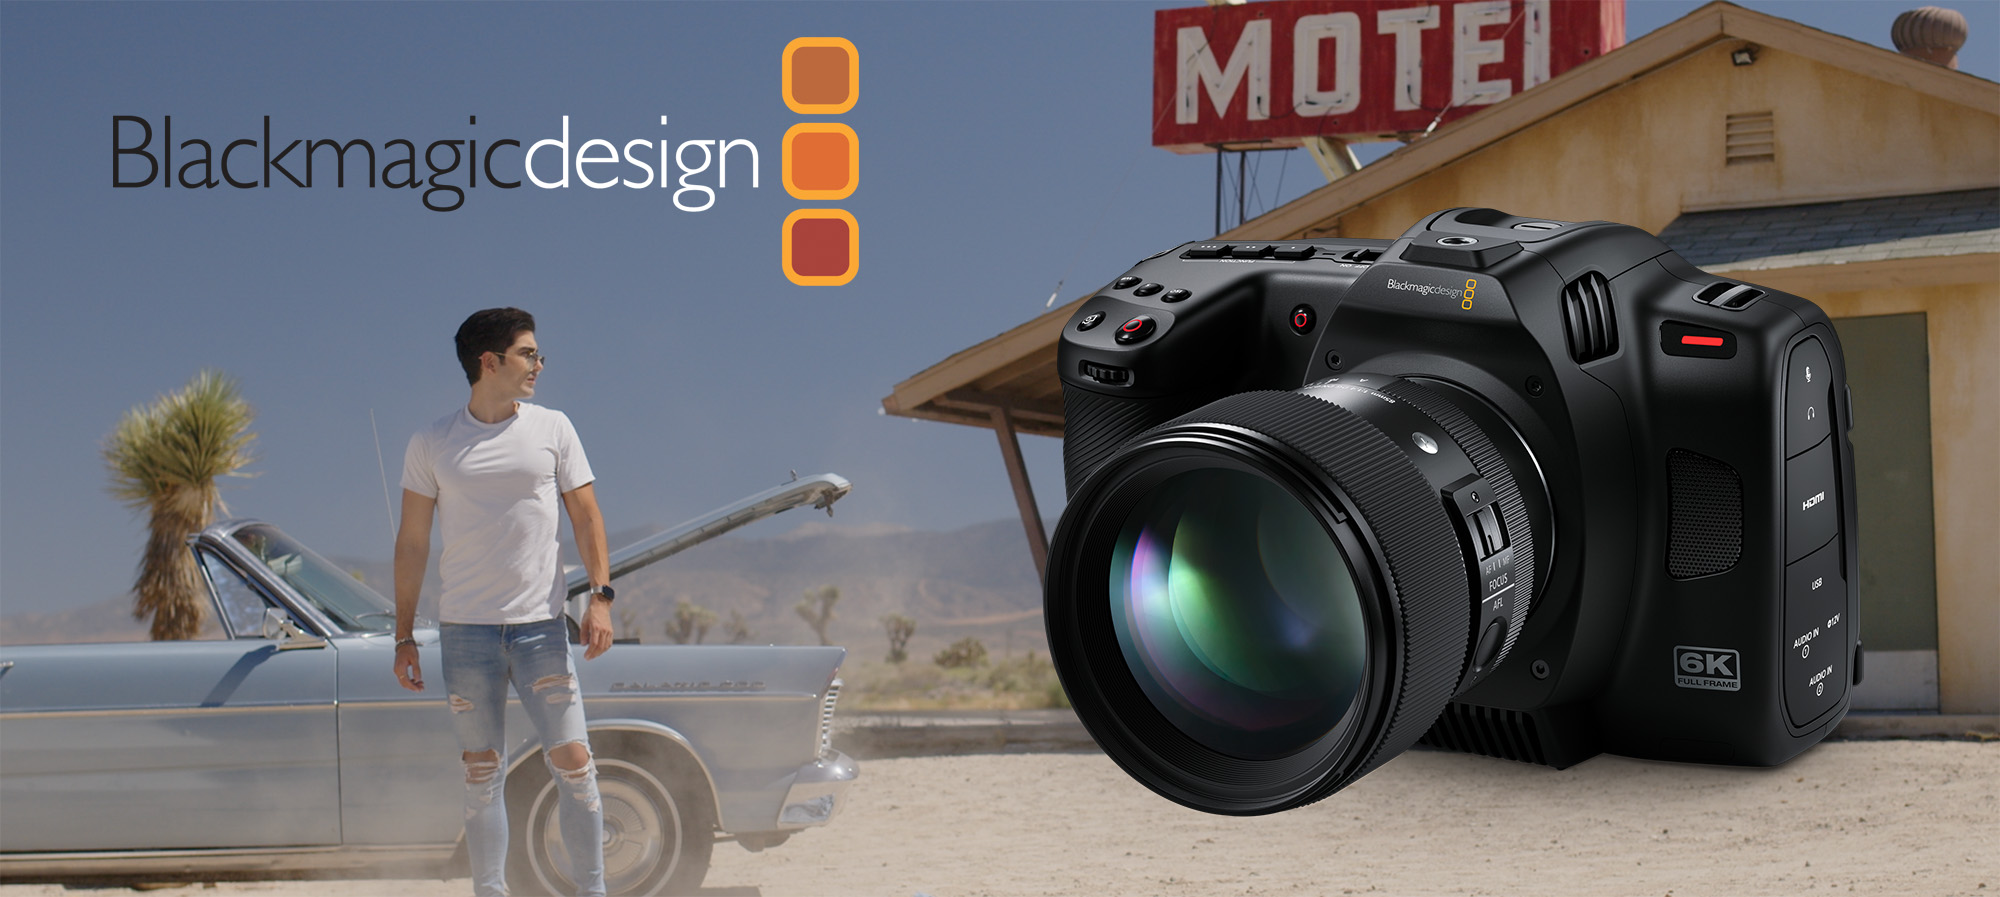 Review: Blackmagic Cinema Camera 6K - Blackmagic Design Expands Its Cinema Camera Lineup 36